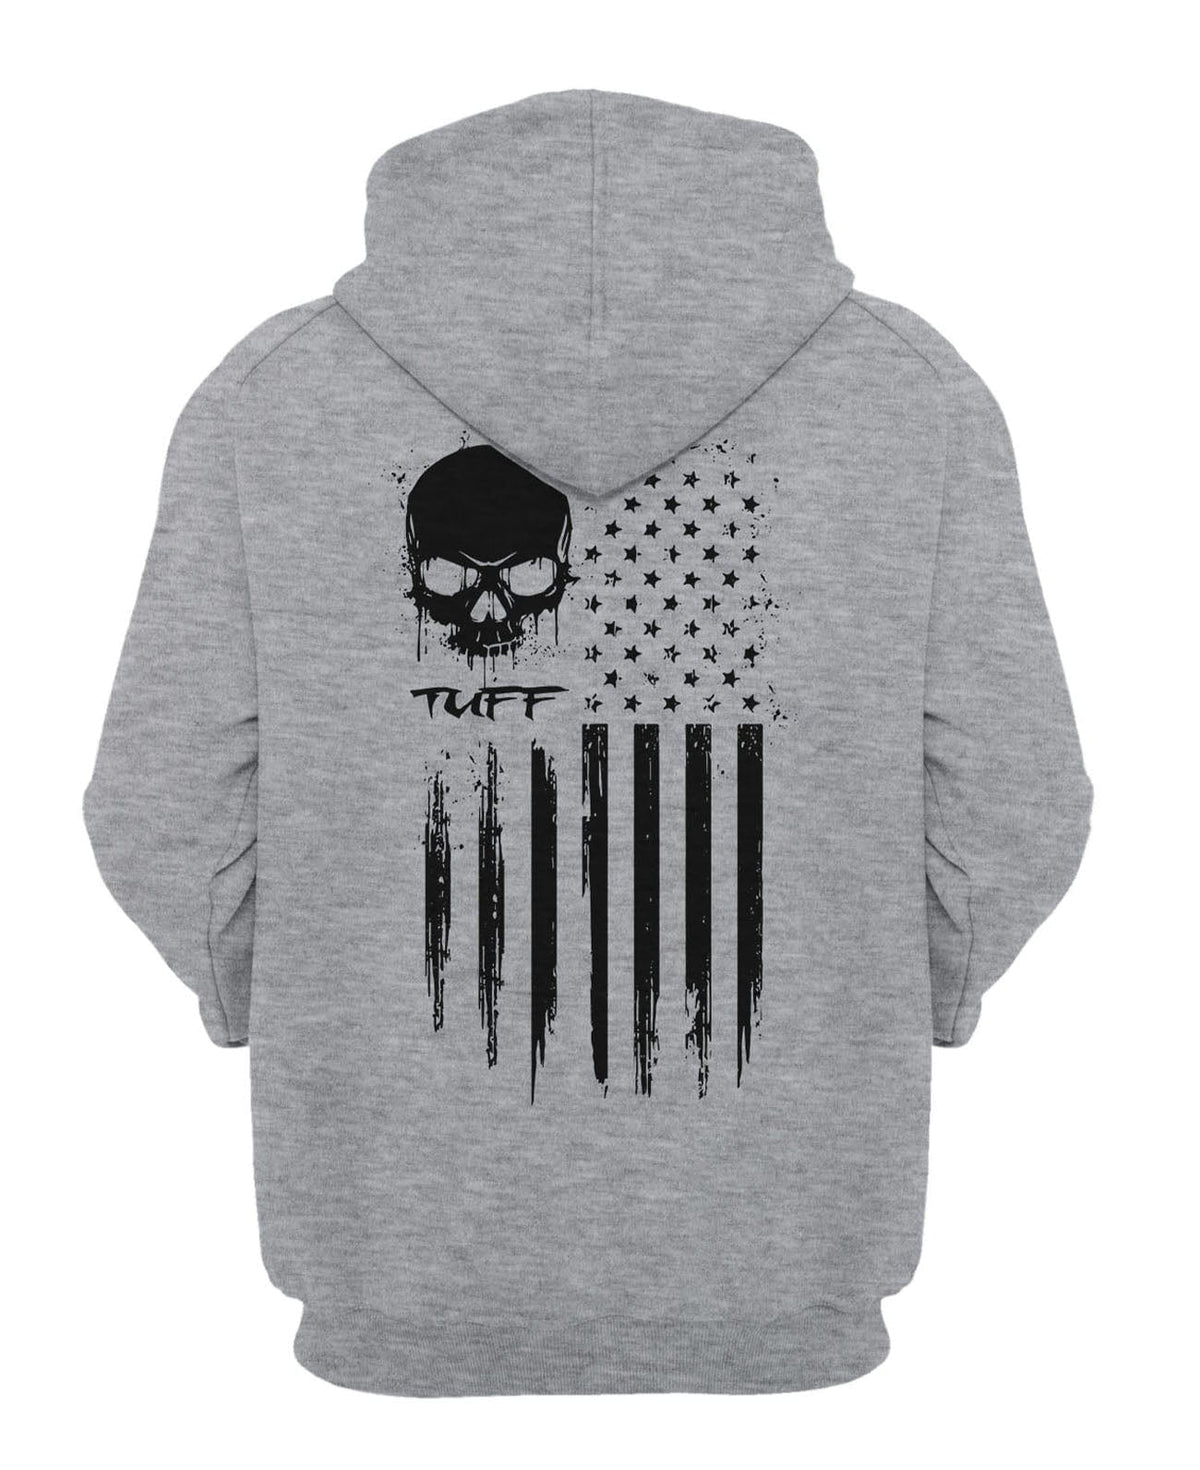 TUFF Skull Flag Hooded Sweatshirt XS / Gray TuffWraps.com